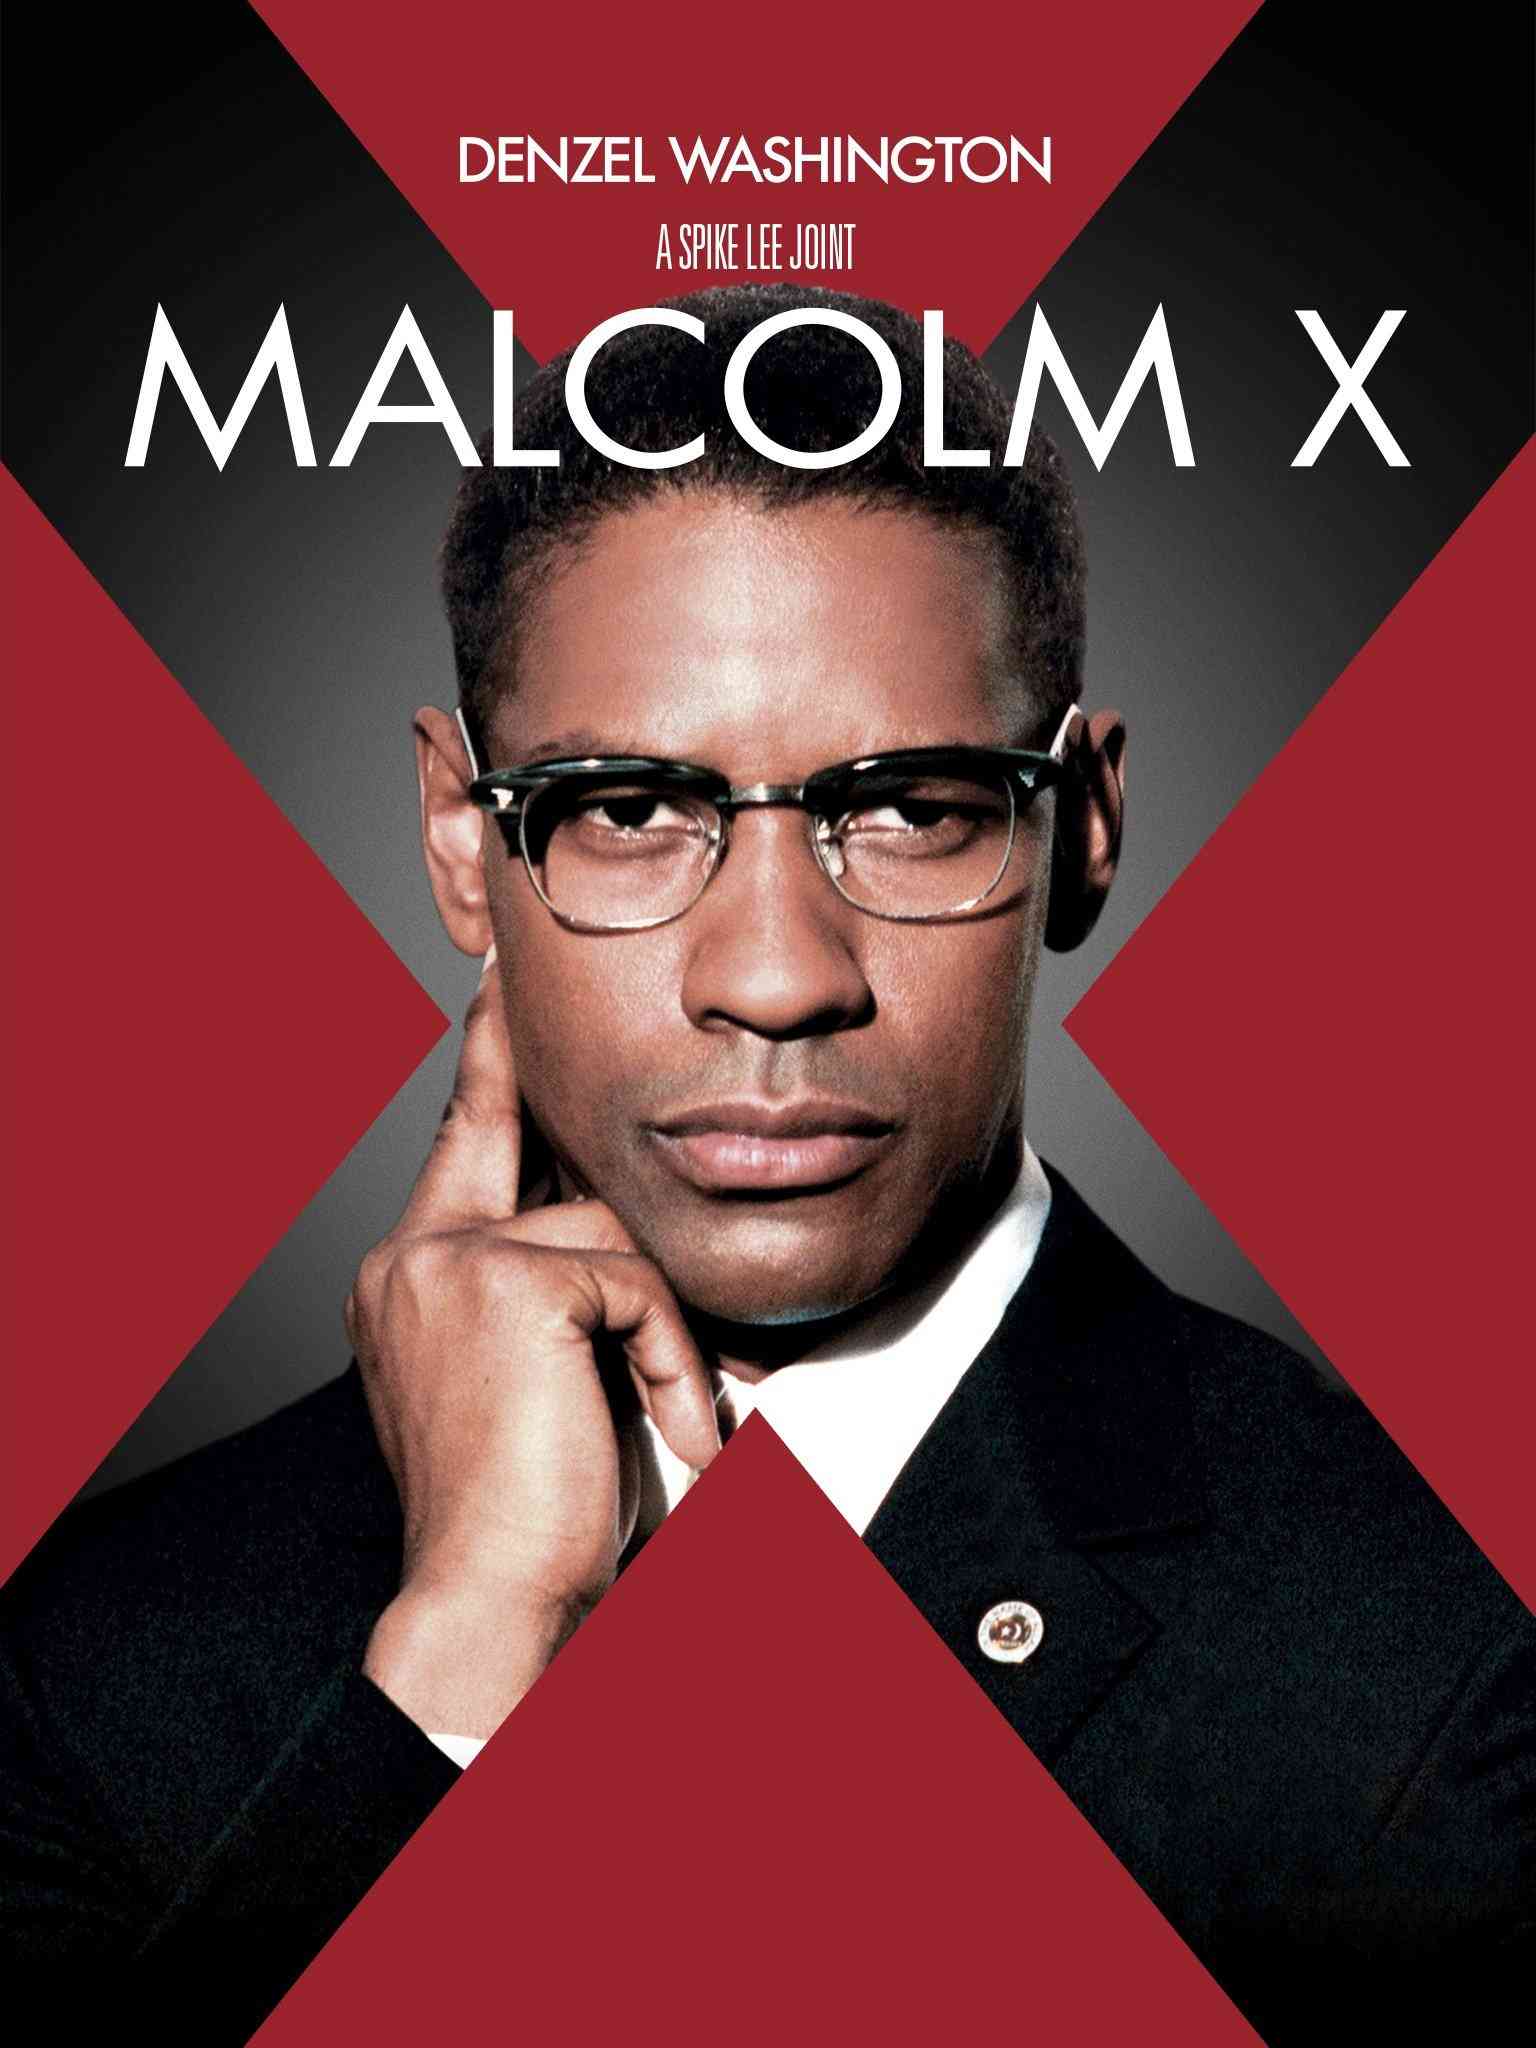 FULL MOVIE: Malcolm X (1992)